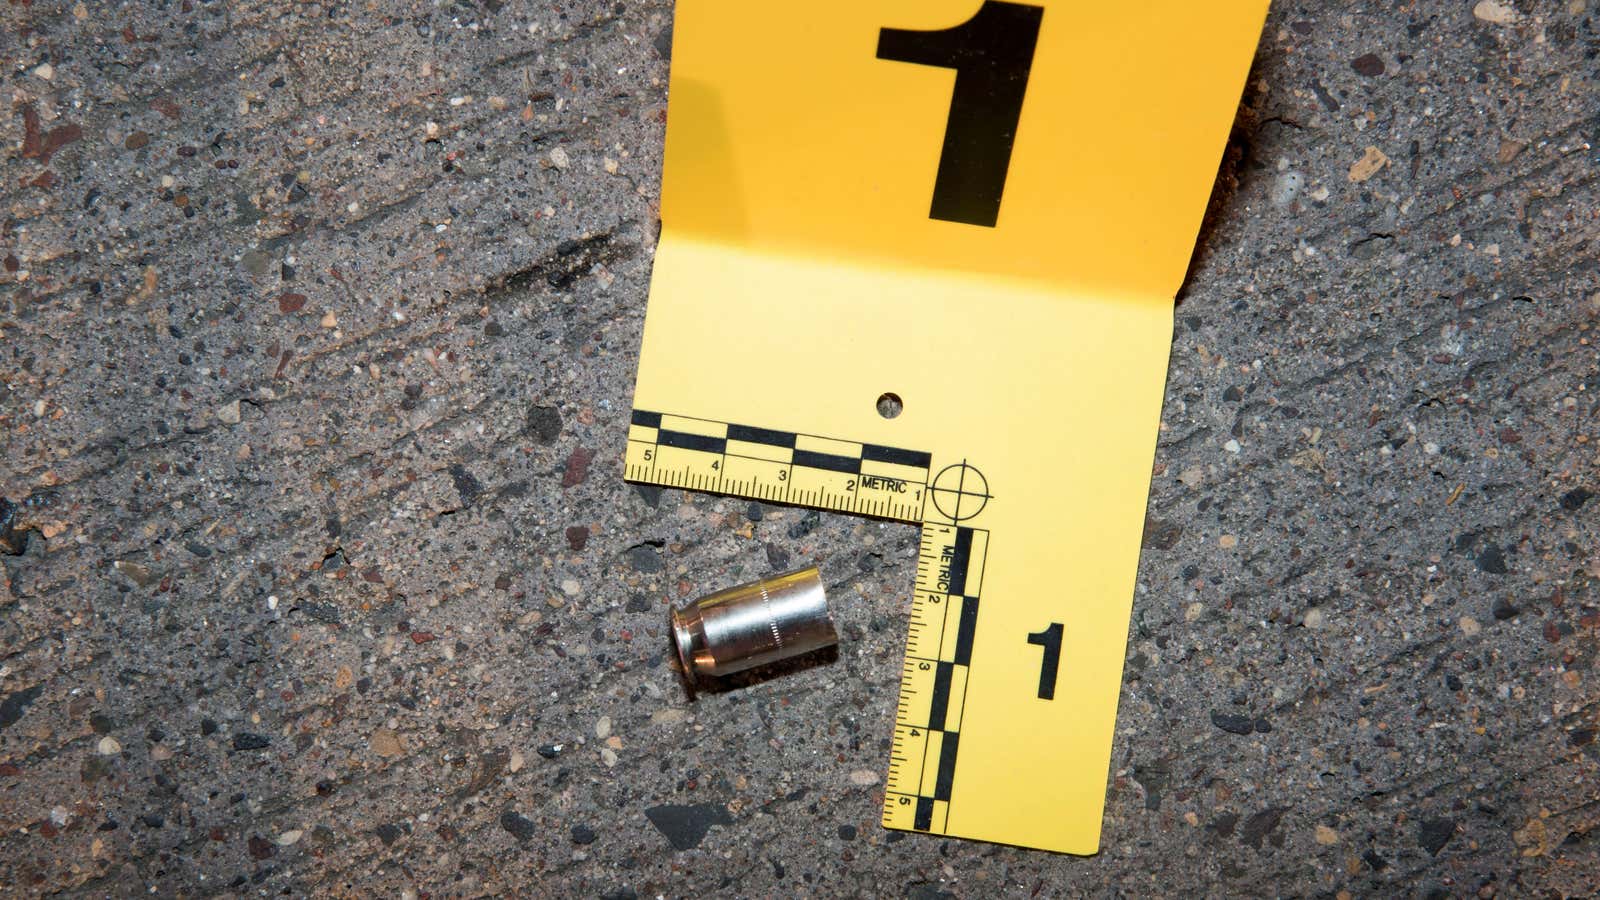 NIBN, the tool tracing guns used in US crimes, has a blindspot